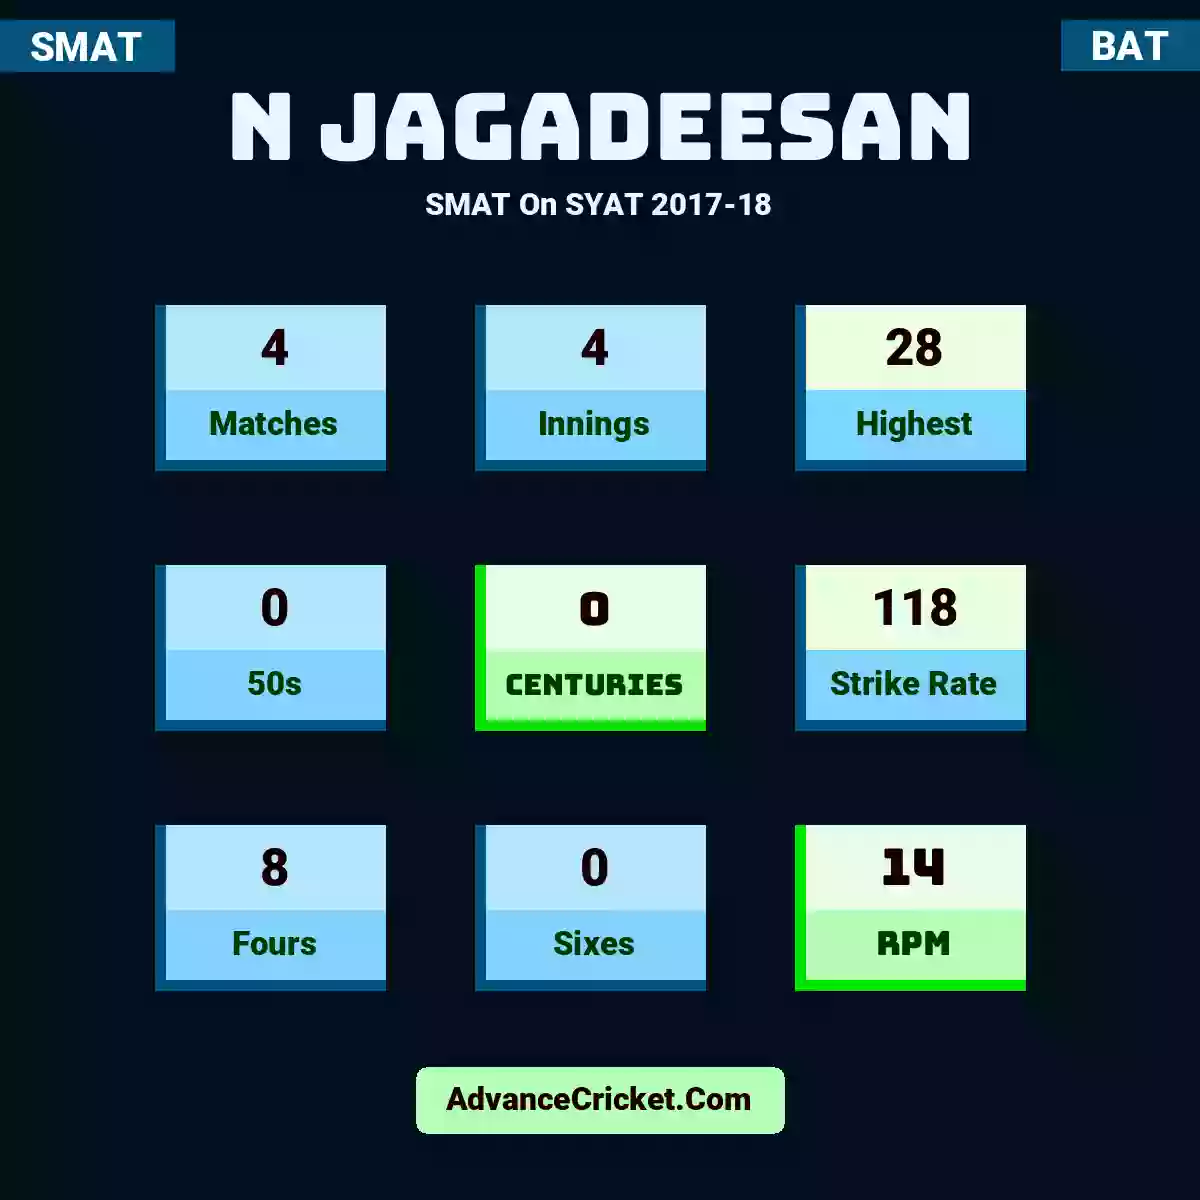 N Jagadeesan SMAT  On SYAT 2017-18, N Jagadeesan played 4 matches, scored 28 runs as highest, 0 half-centuries, and 0 centuries, with a strike rate of 118. N.Jagadeesan hit 8 fours and 0 sixes, with an RPM of 14.